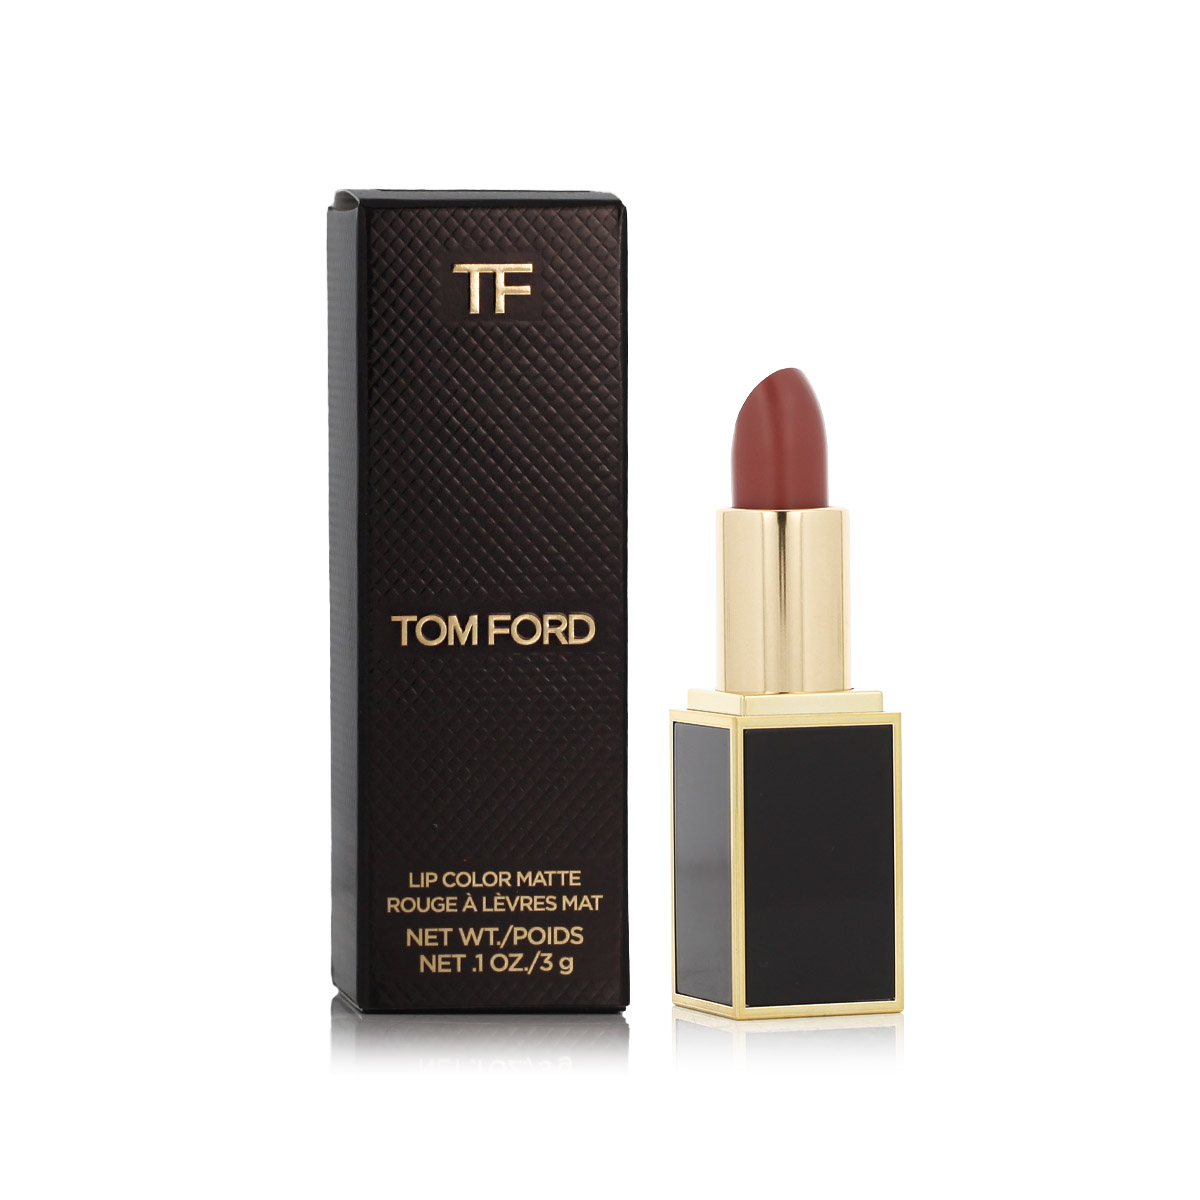 Tom Ford Lip Color 3g NIŠINIAI lūpdažis